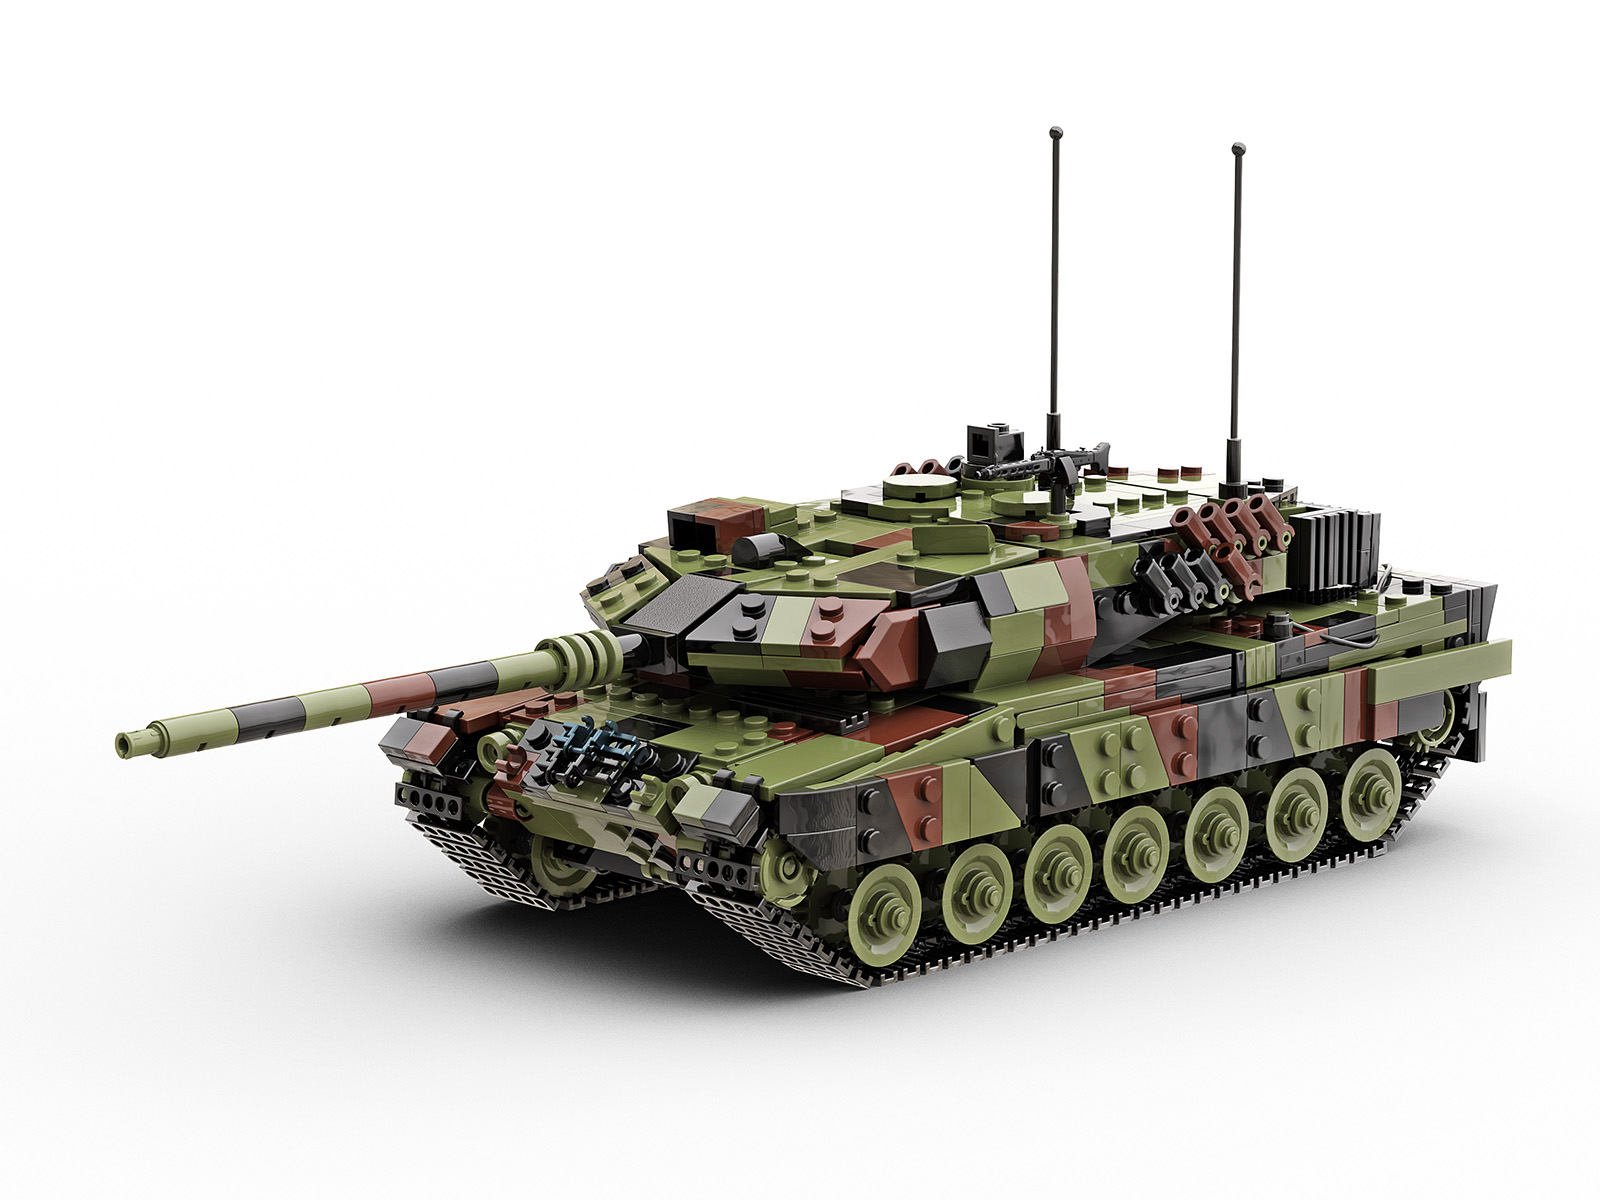 German Leopard 2a6 Main Battle Tank Lego Compatible 